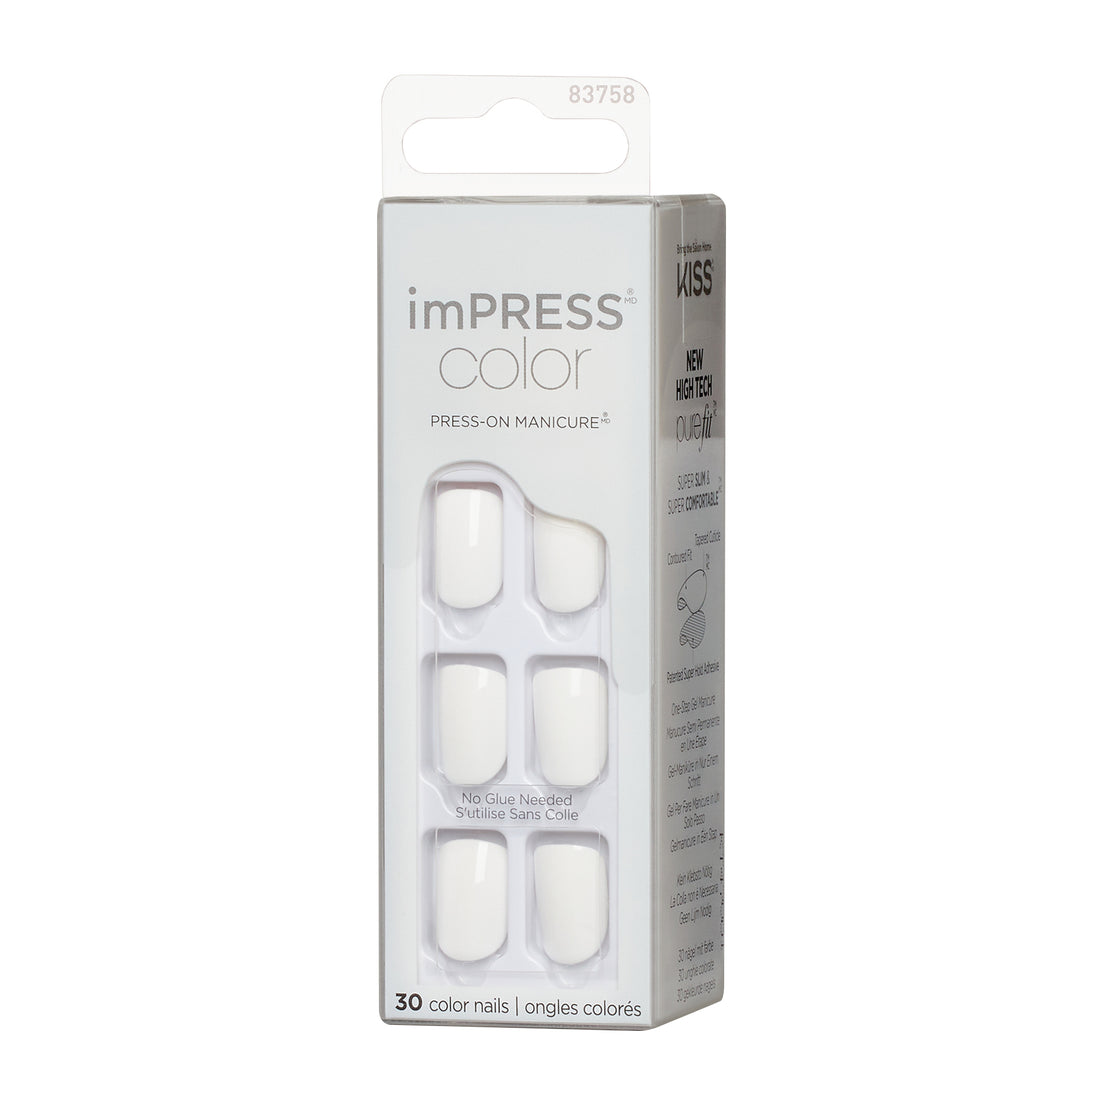 imPRESS Color Press-On Manicure Short Square- Frosting